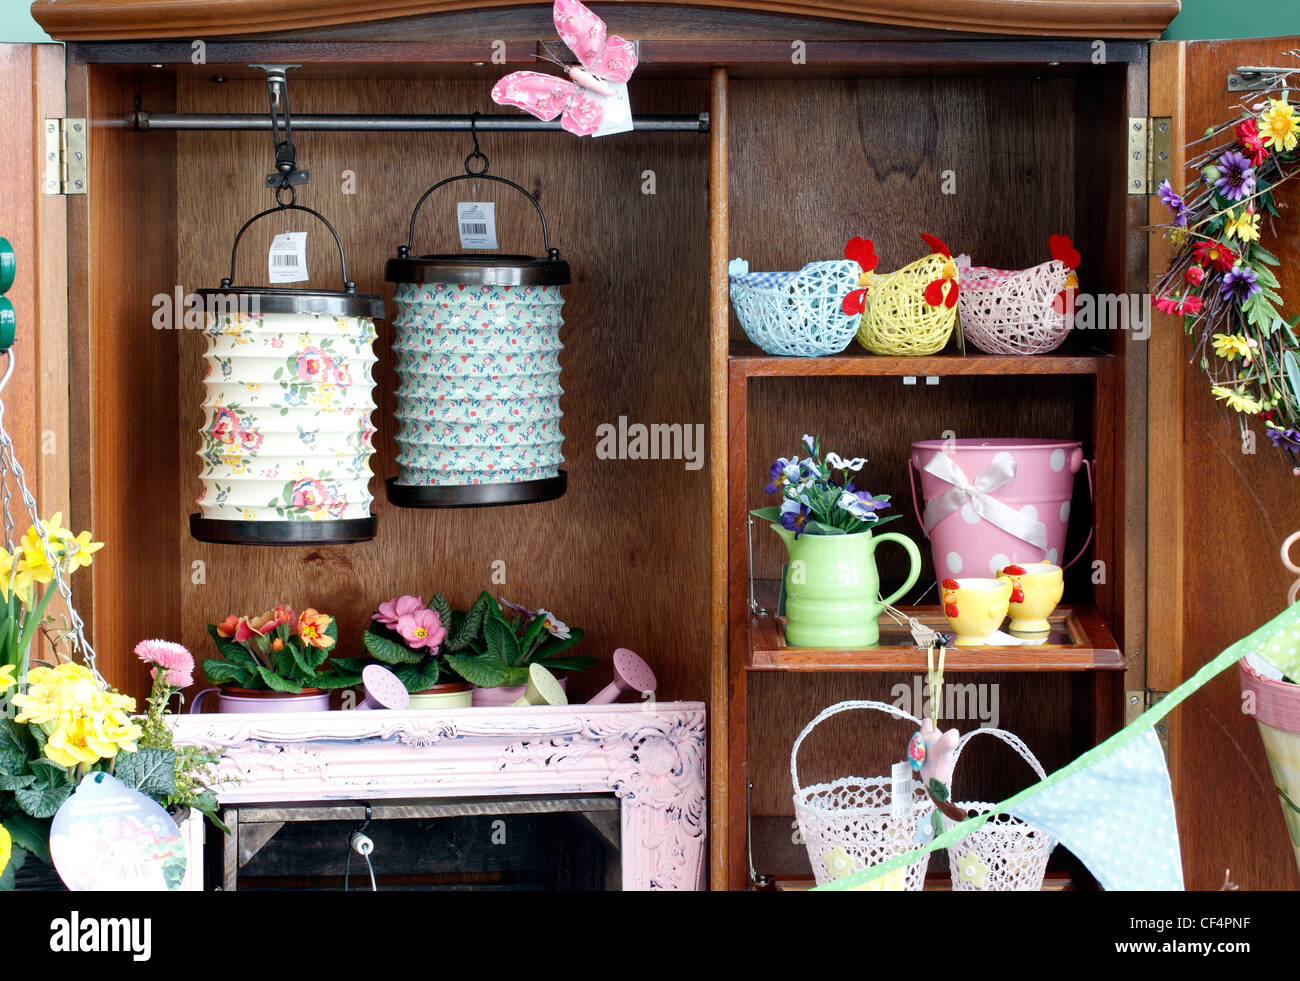 Cupboard and shelf display Stock Photo